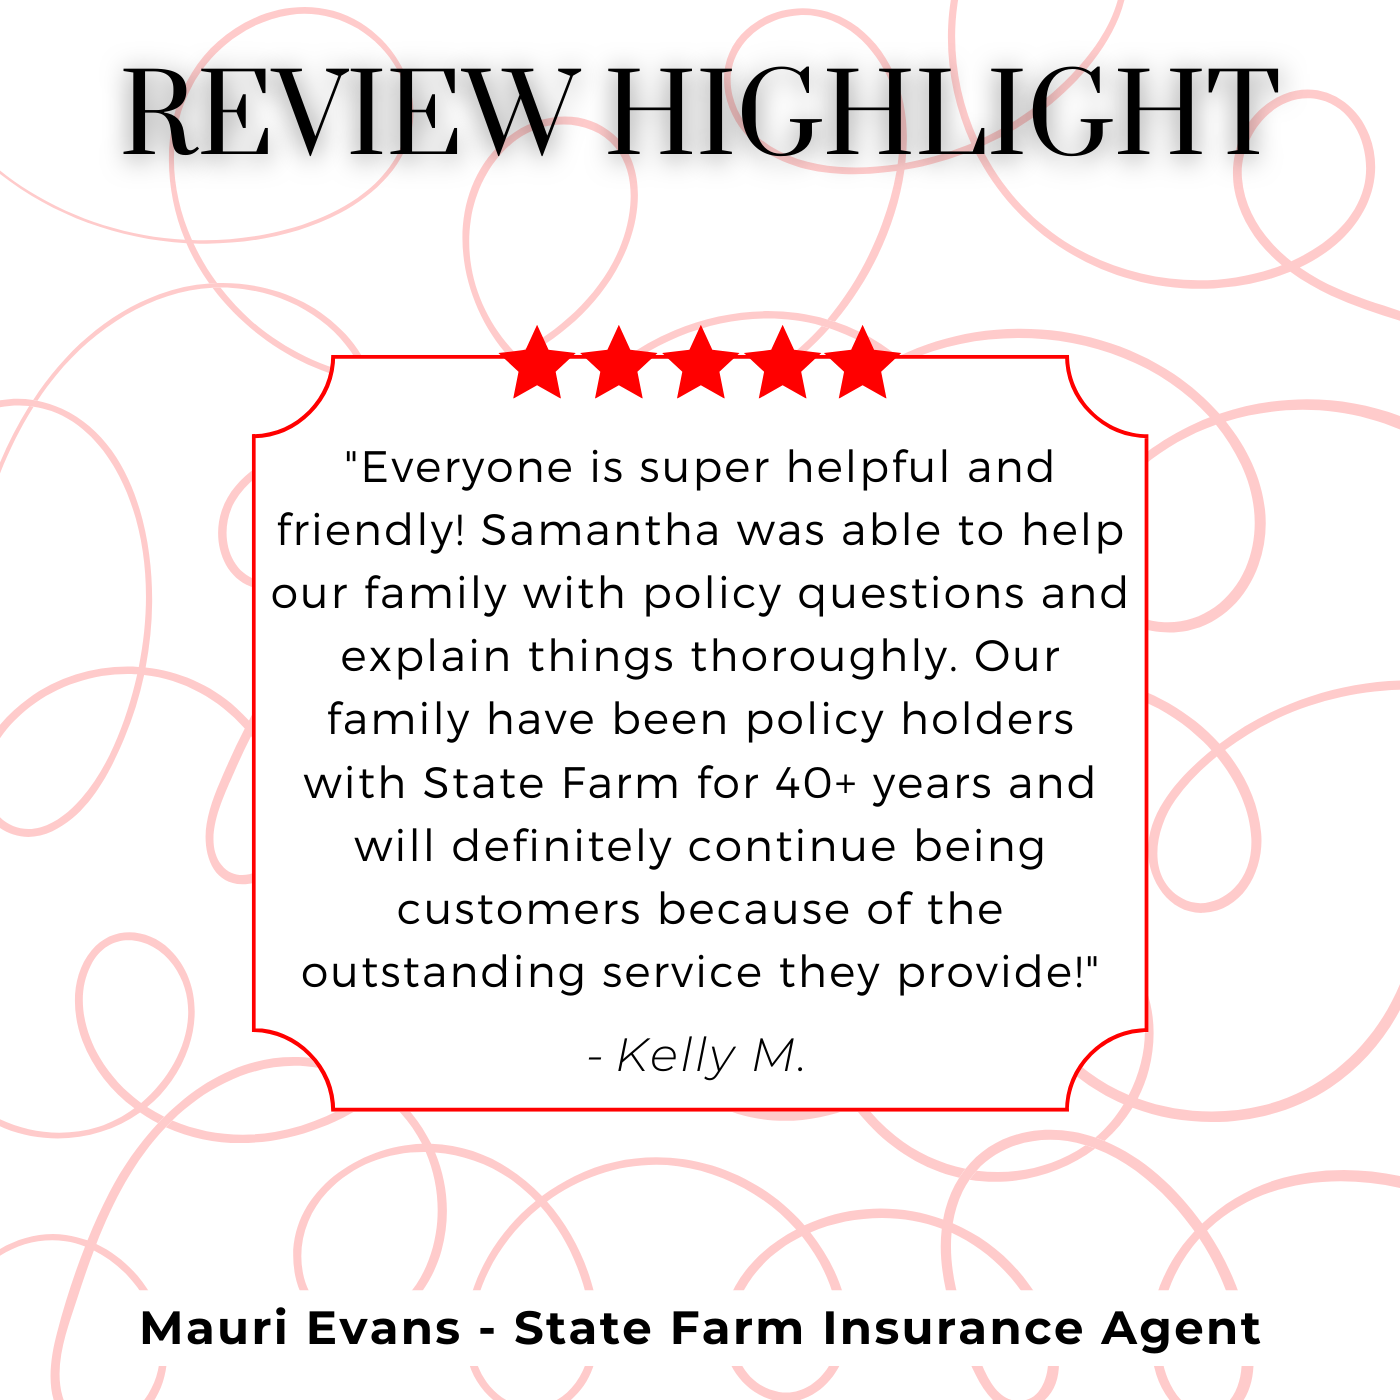 Mauri Evans - State Farm Insurance Agent